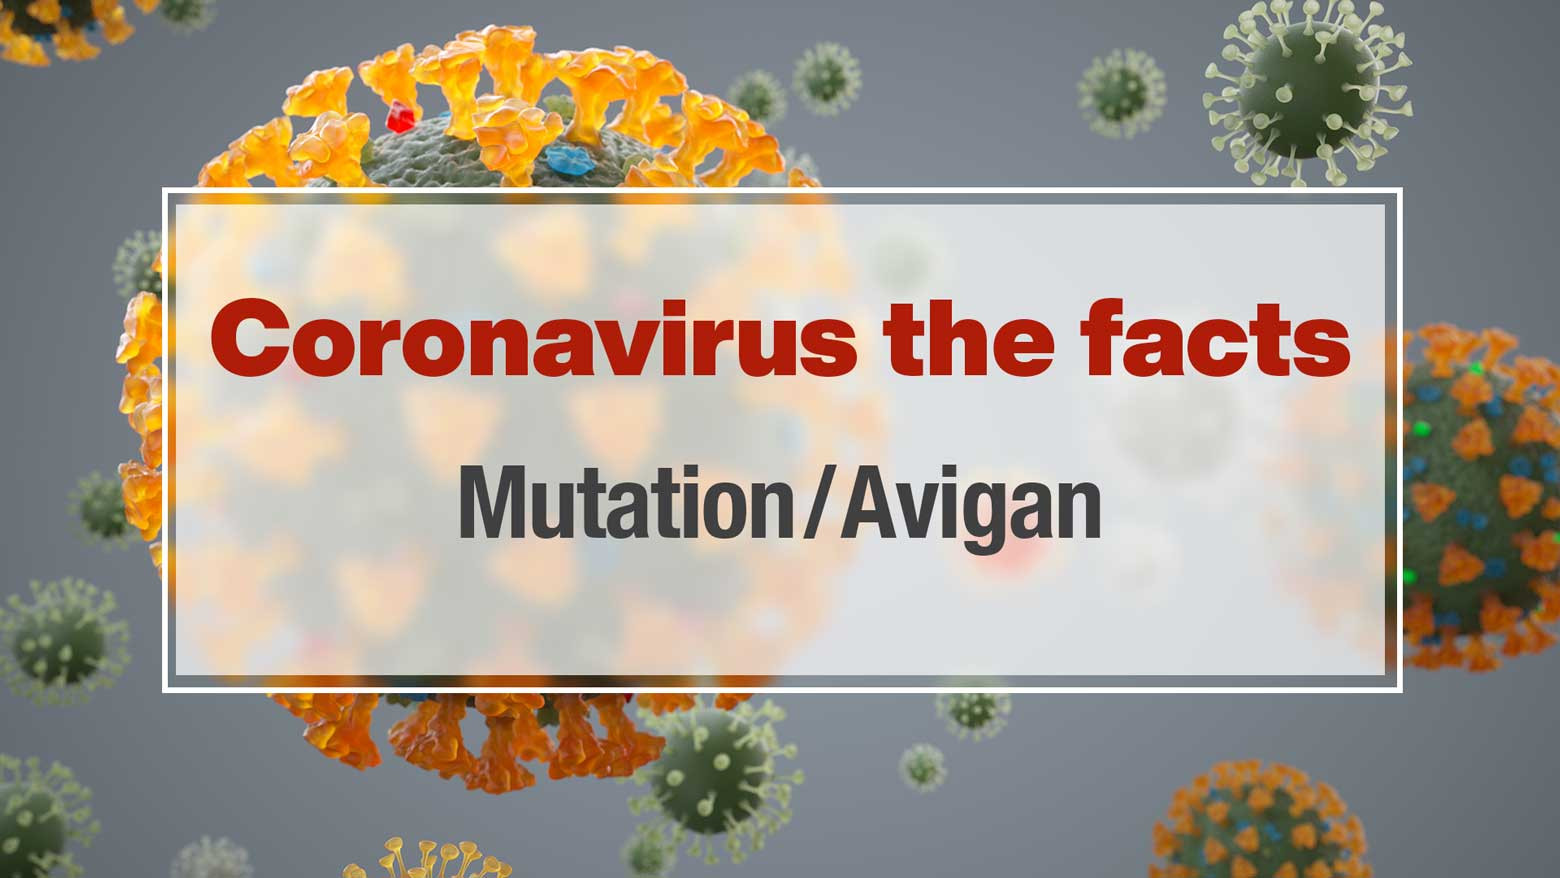 Does the coronavirus mutate?
How effective is Avigan?